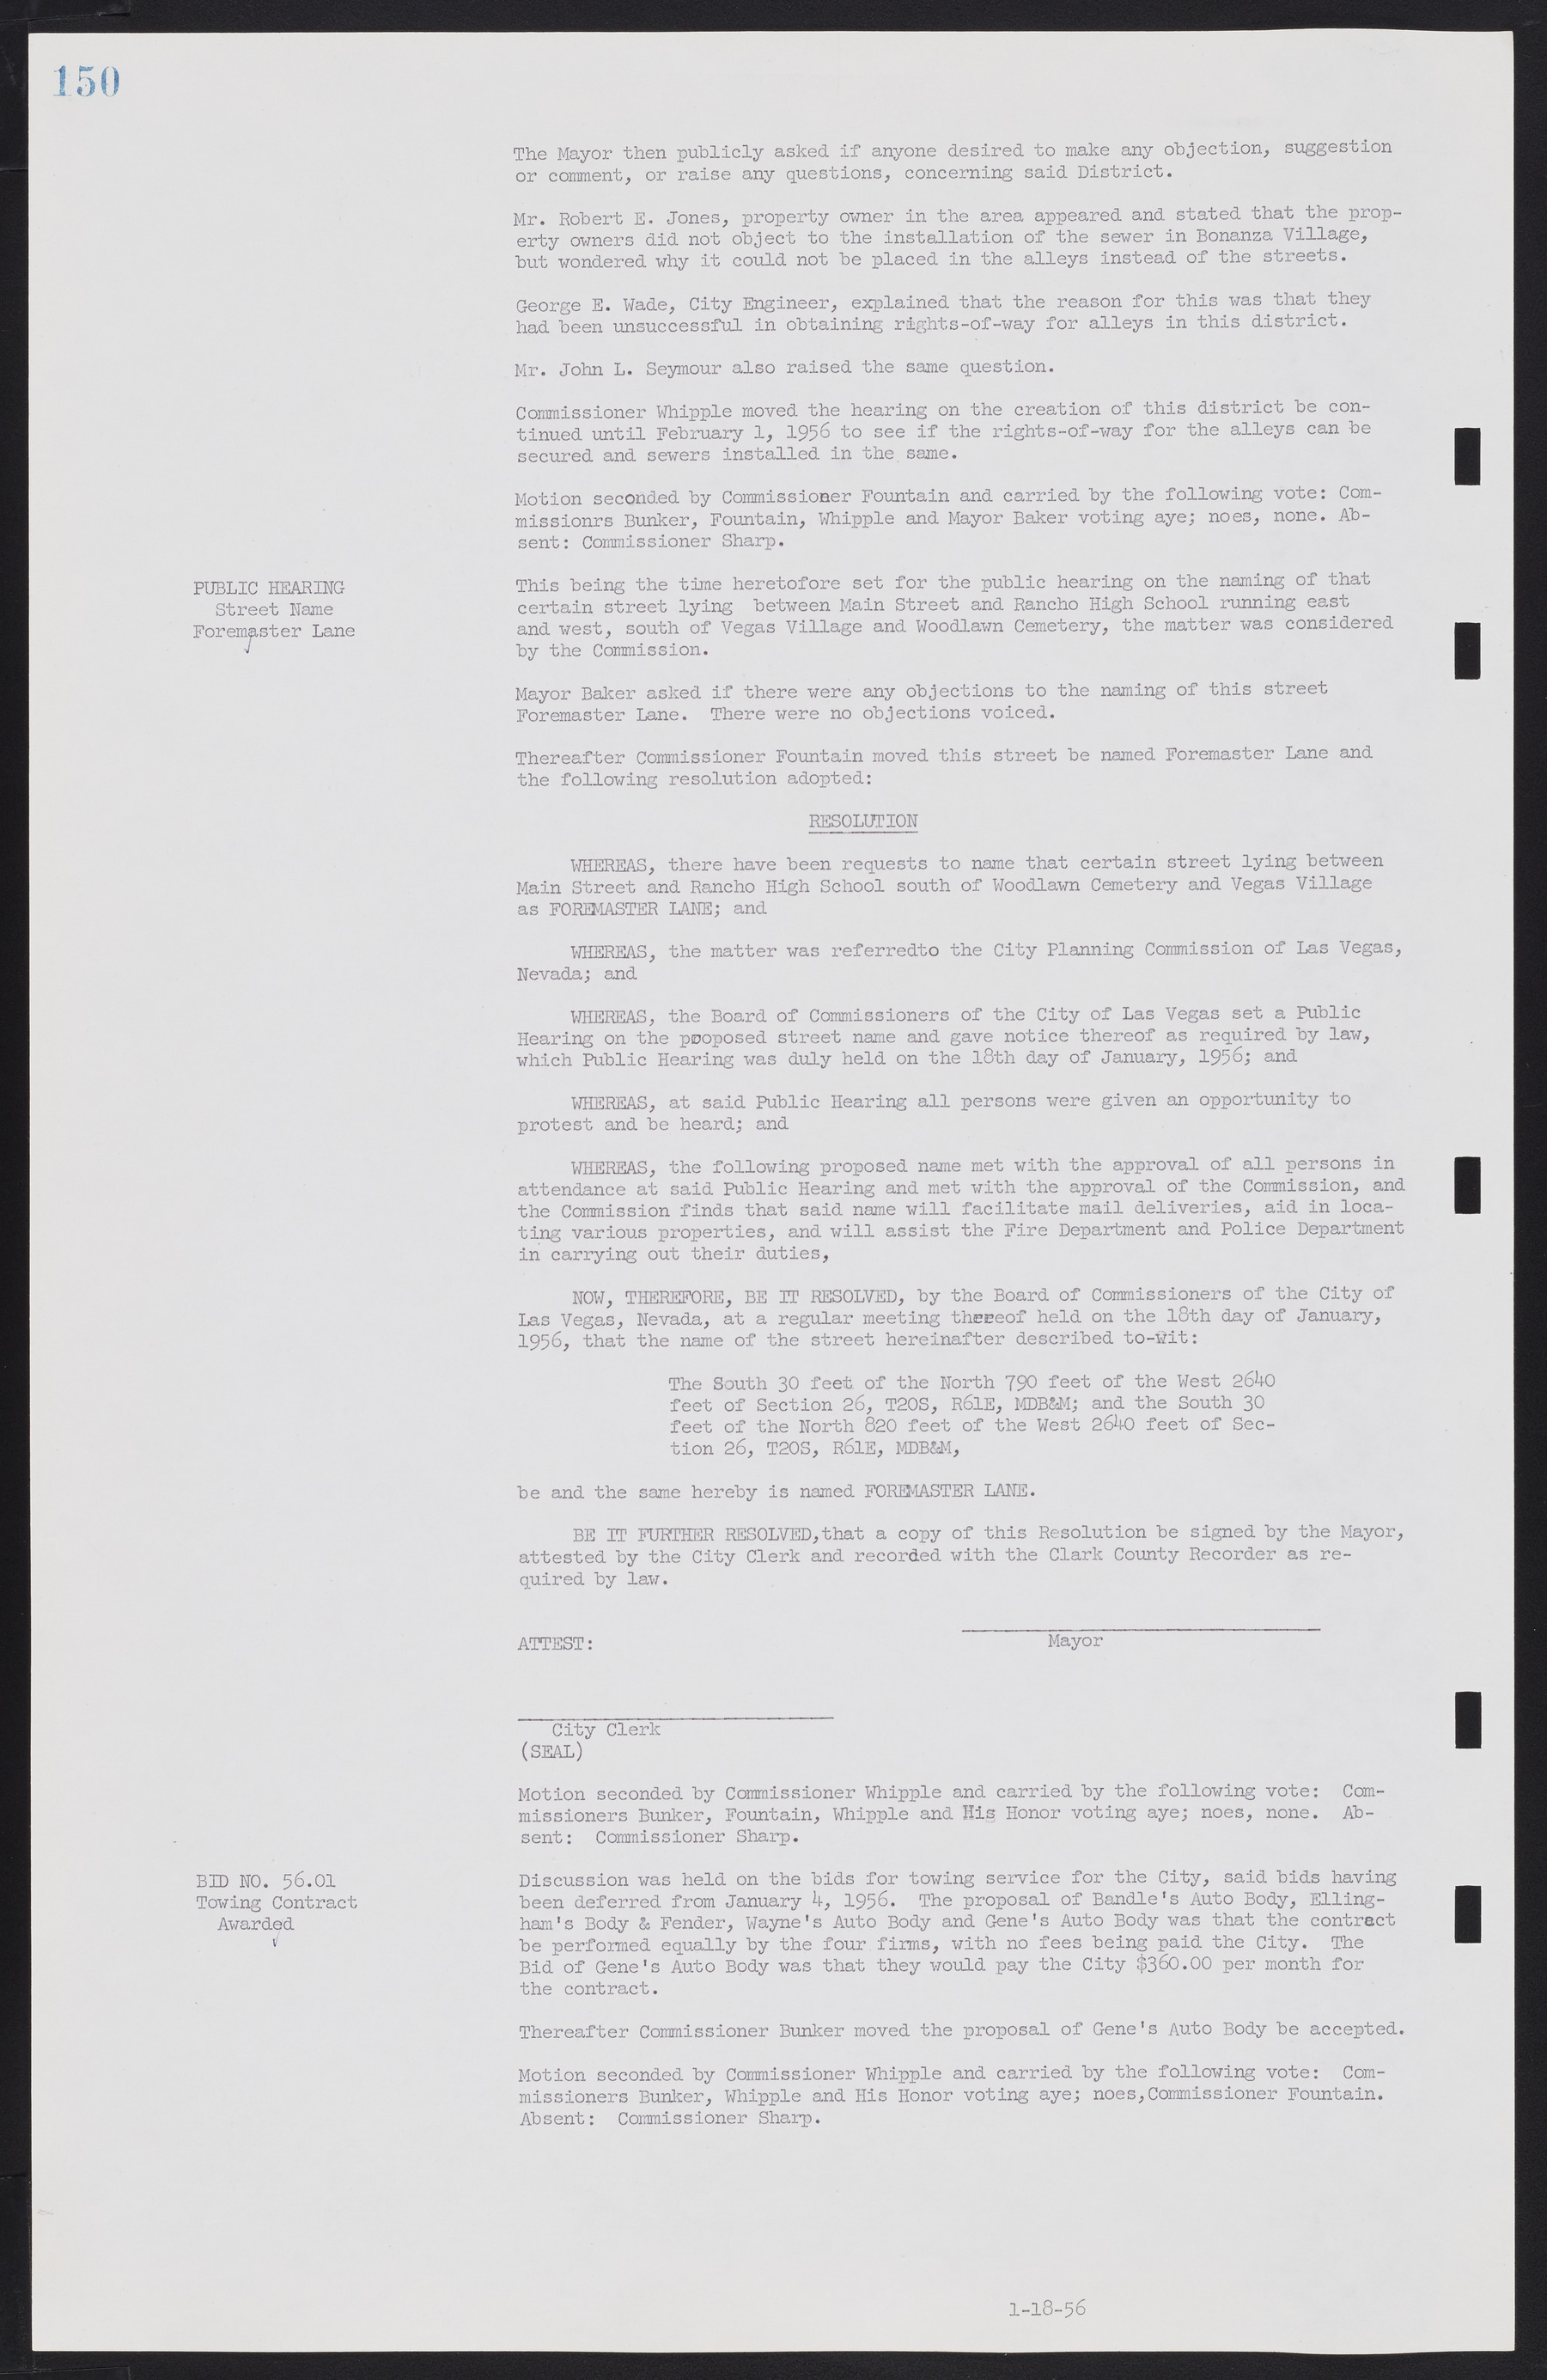 Las Vegas City Commission Minutes, September 21, 1955 to November 20, 1957, lvc000010-164